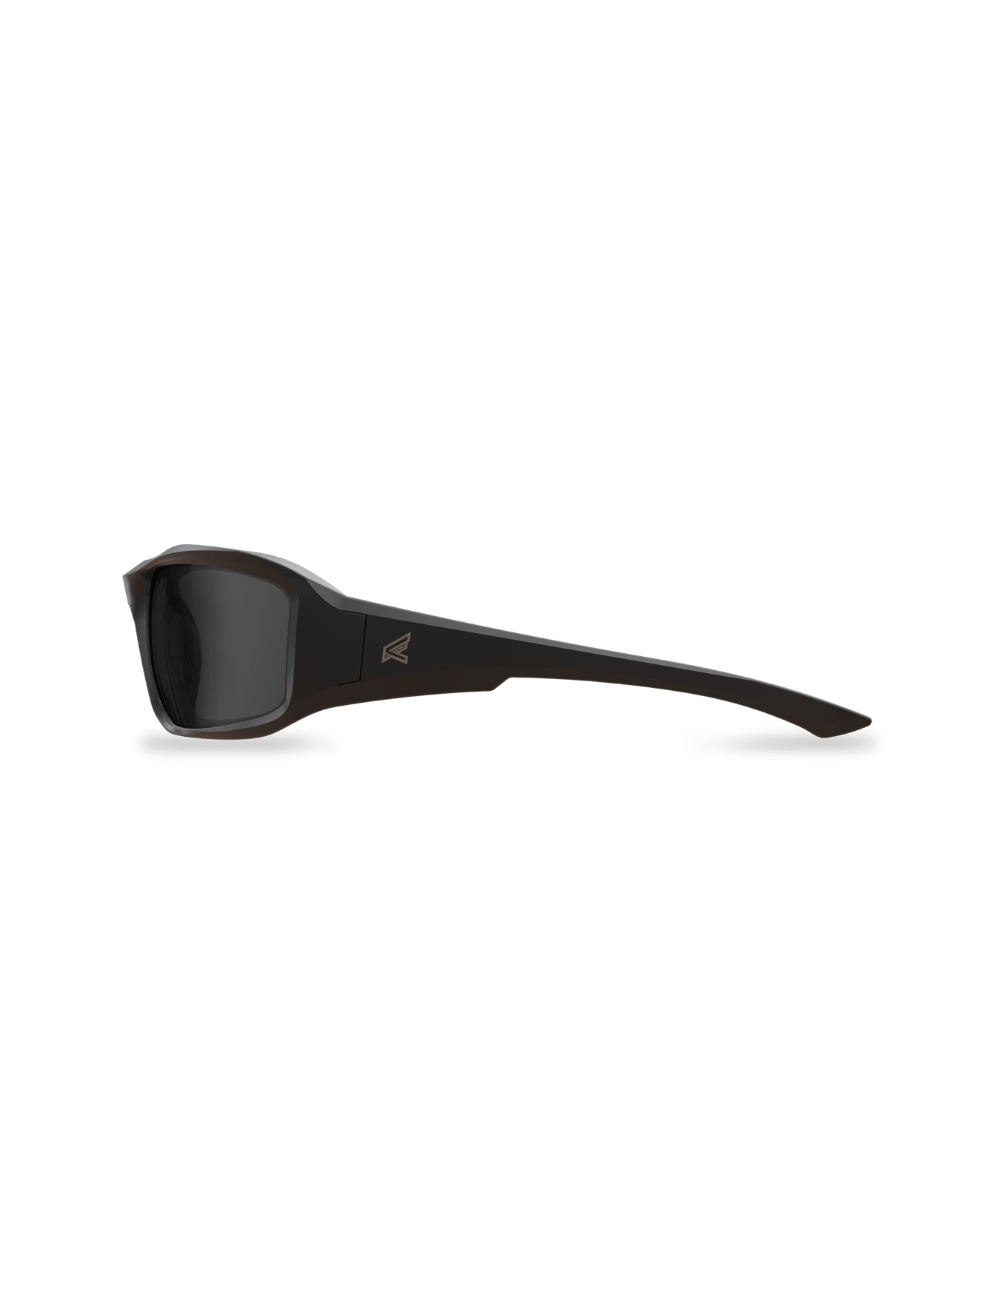 EDGE Brazeau Safety Glasses, Polarized Lenses, Non-Slip, Impact/Scratch  Resistant, 99.9% UV Protect, ANSI Z87 Rated (Black Frame, Polarized Smoke)